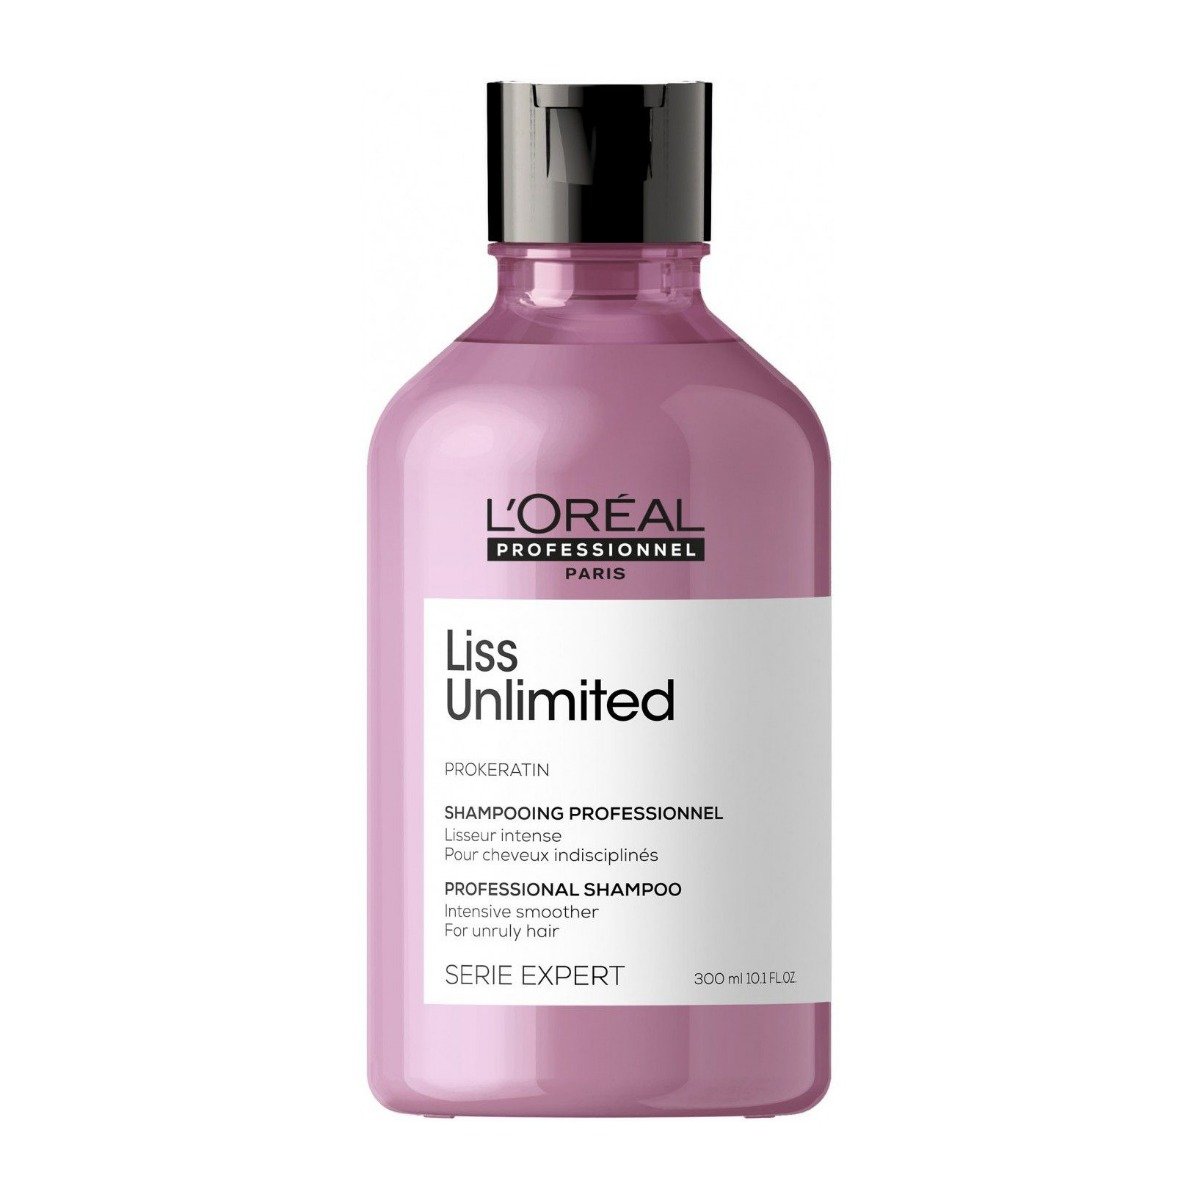 L’Oreal Liss Unlimited Shampoo - 300ml - Bloom Pharmacy